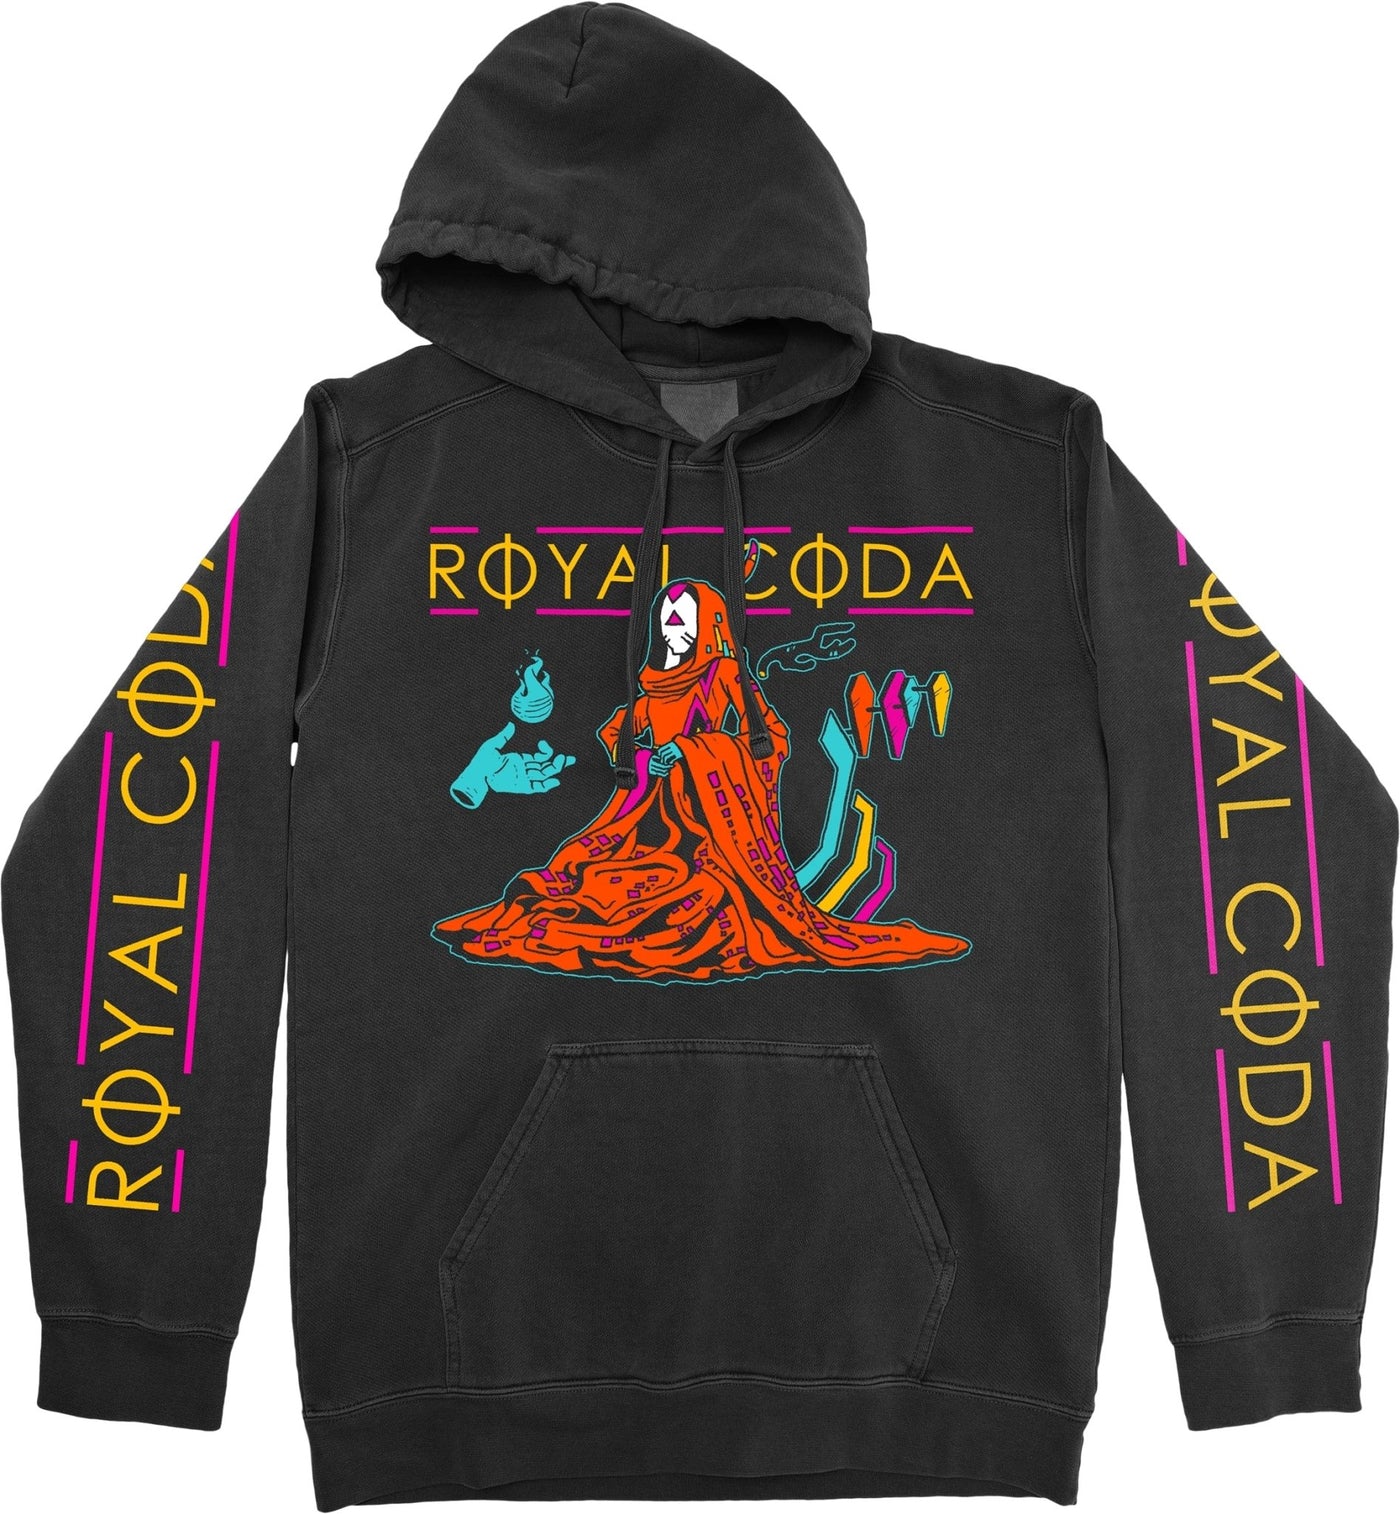 Royal Coda Black